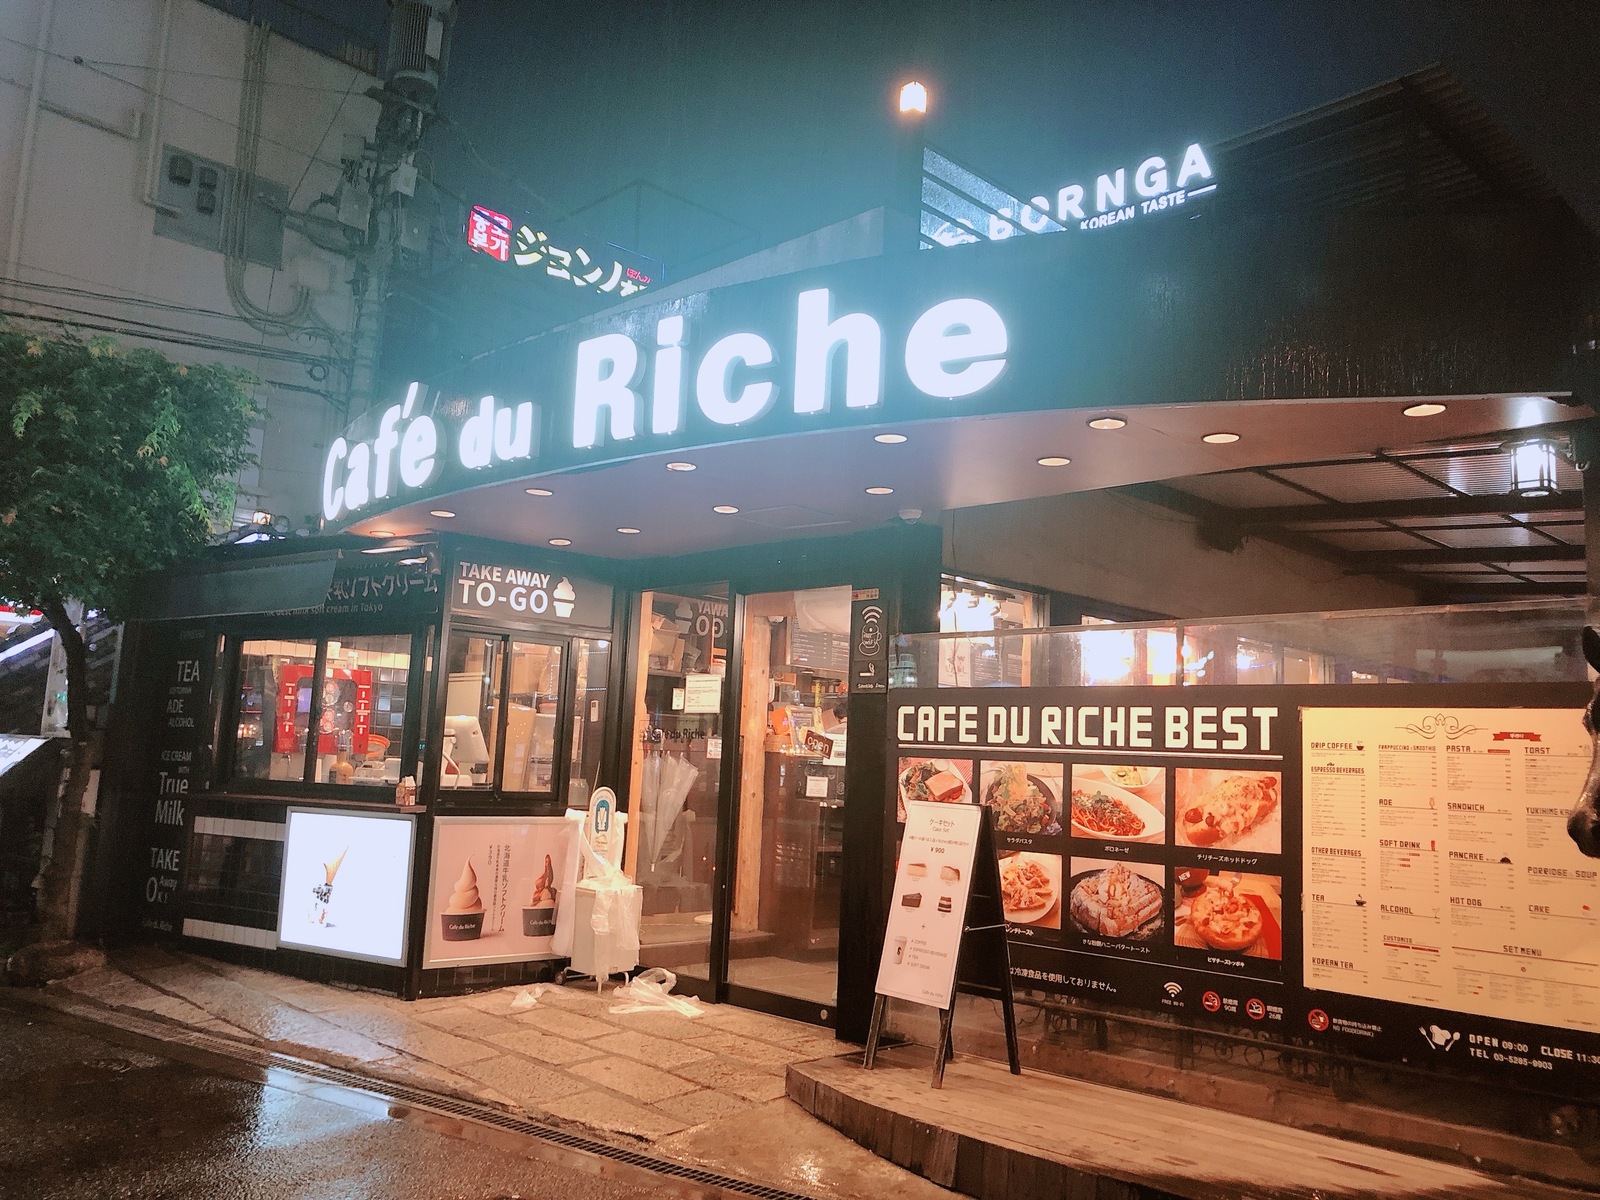 「Cafe du Riche(カフェドリッチェ)」ディナーで行ってみた感想のアイキャッチ画像